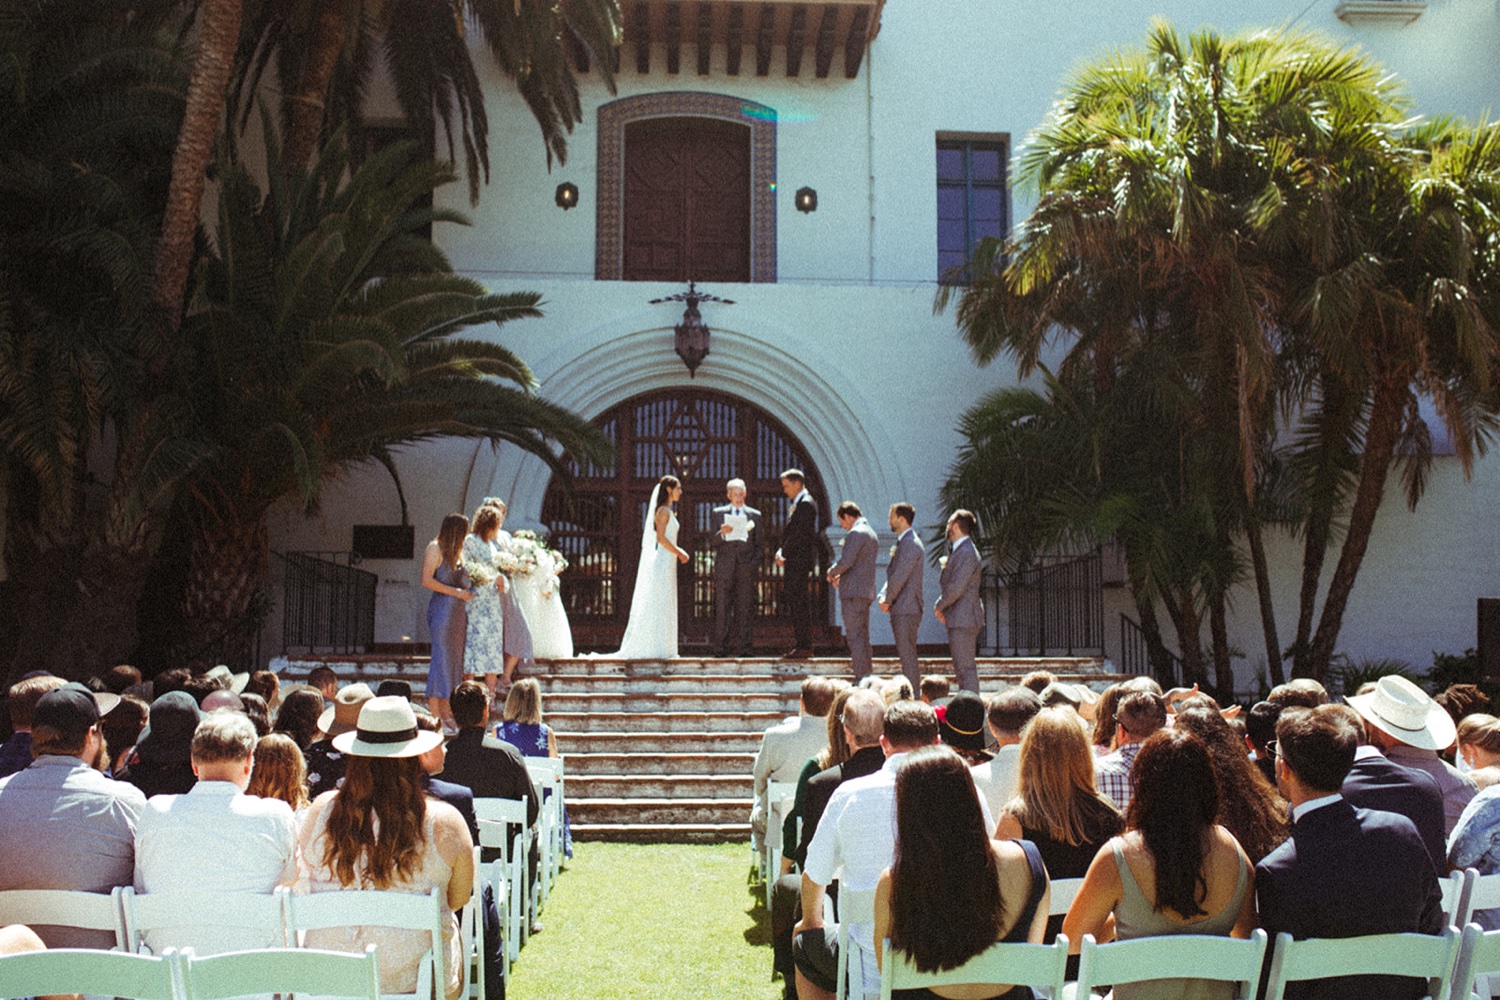 Wedding is held in Sunken Garden at the Santa Barbara Courthouse